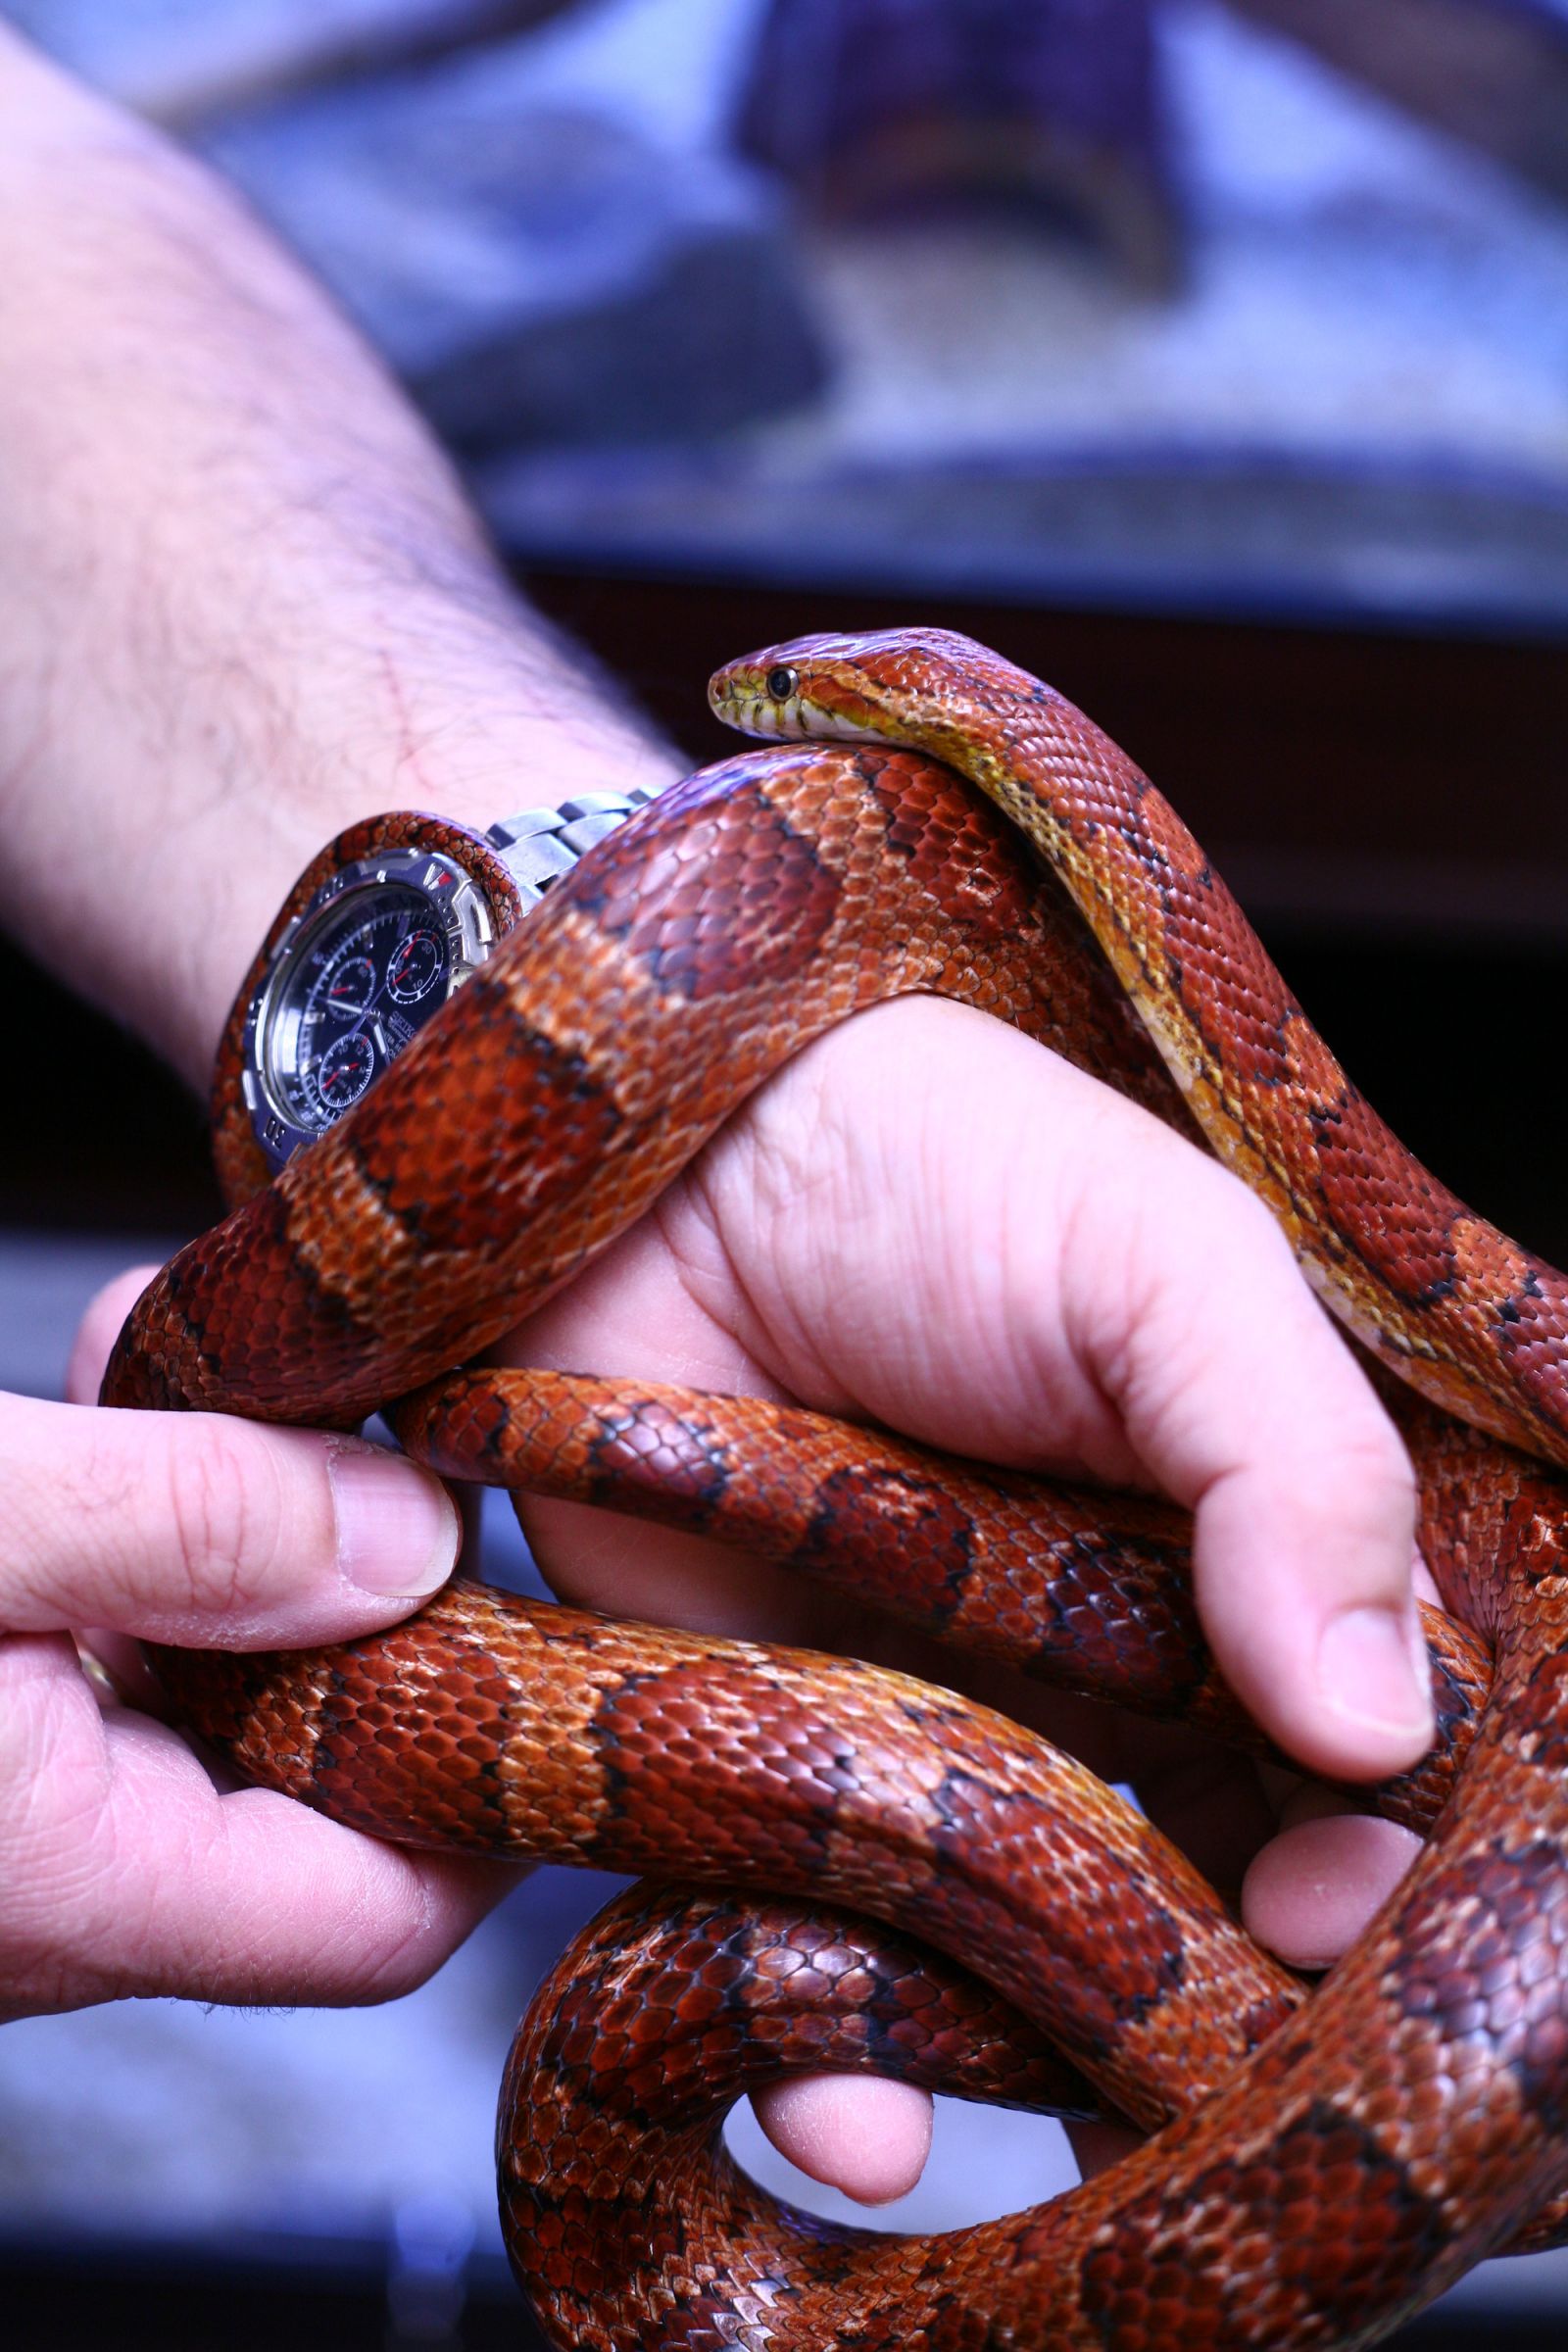 Snake coiled around wrist